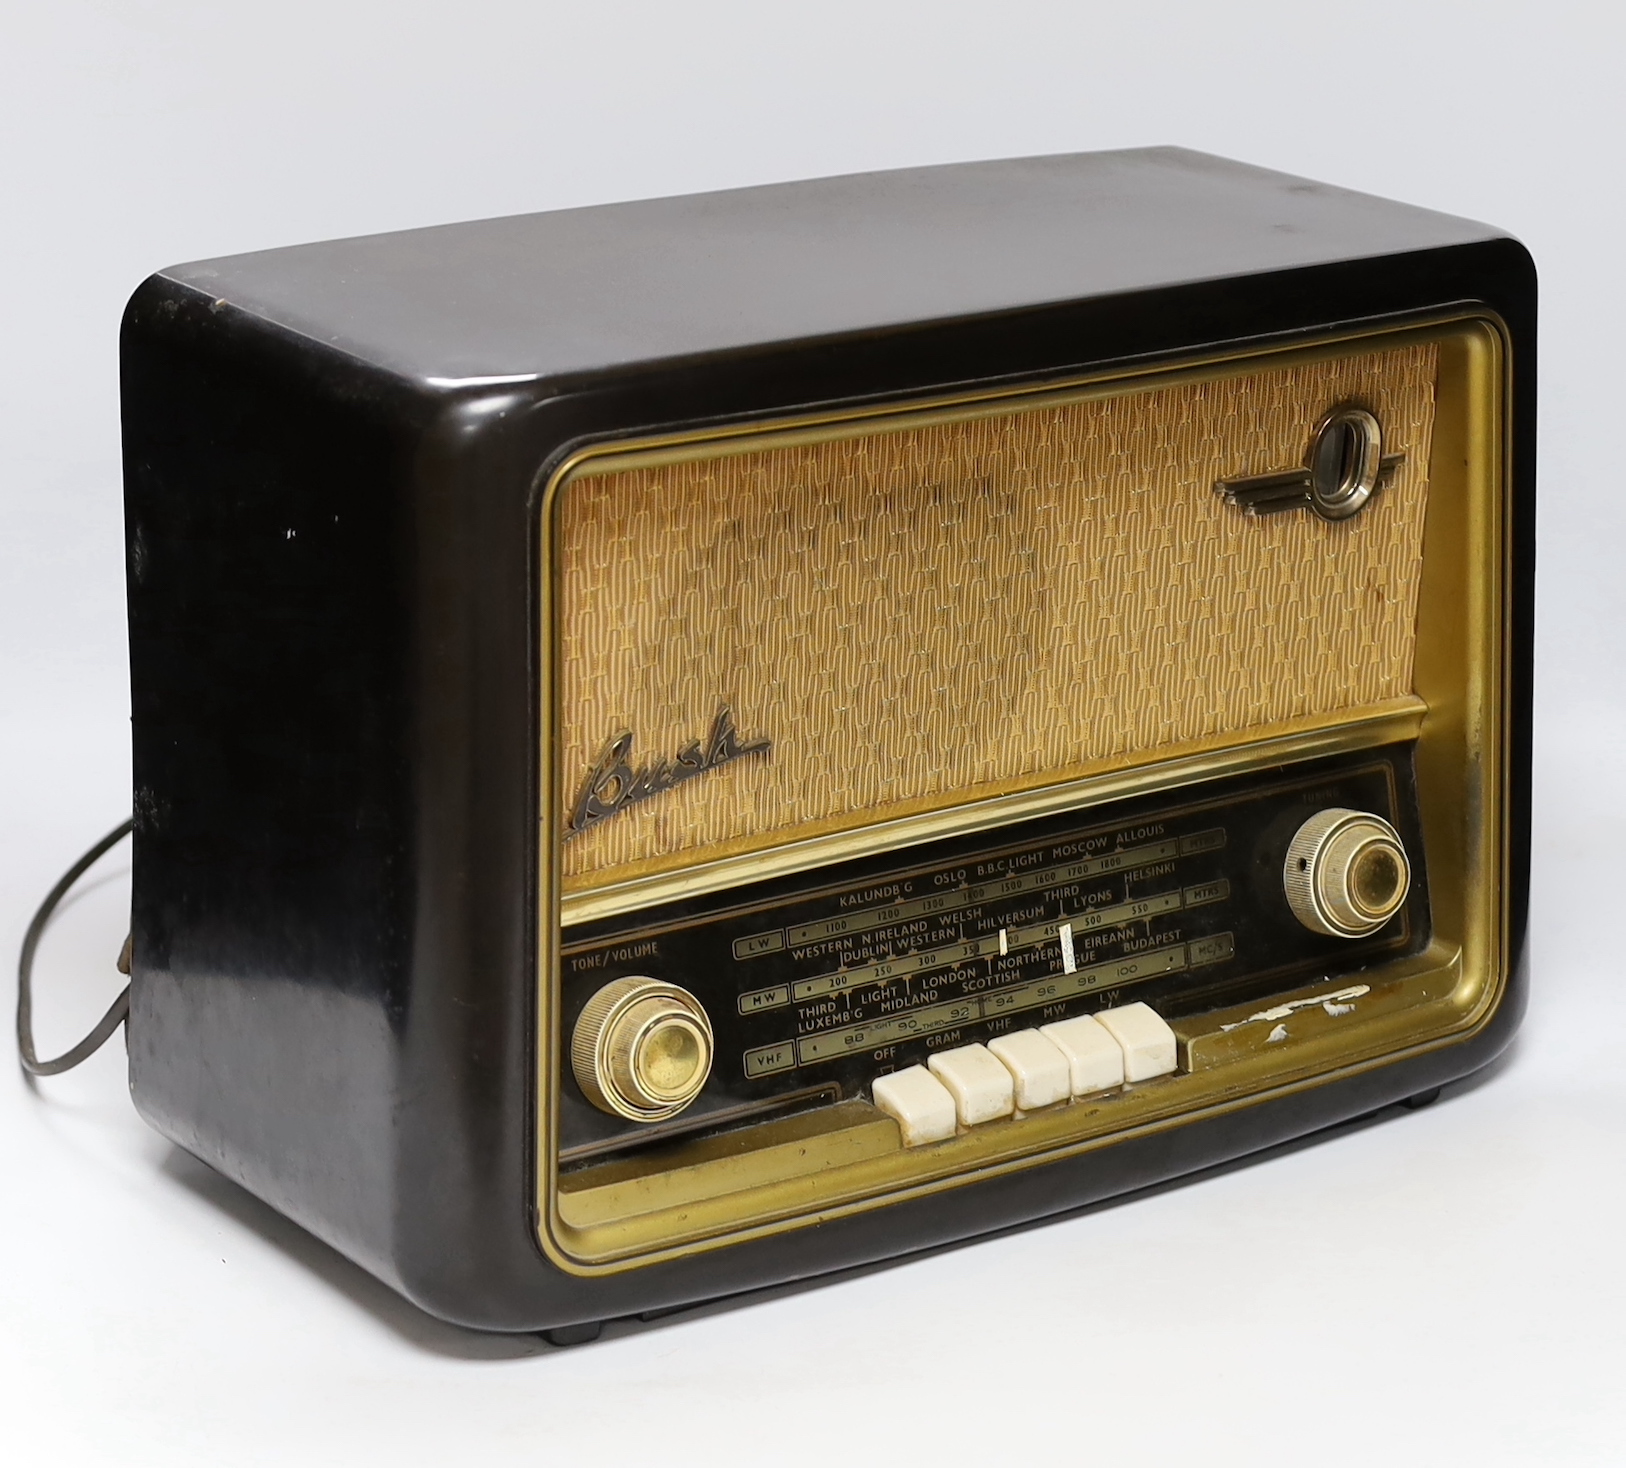 A vintage Bush bakelite radio